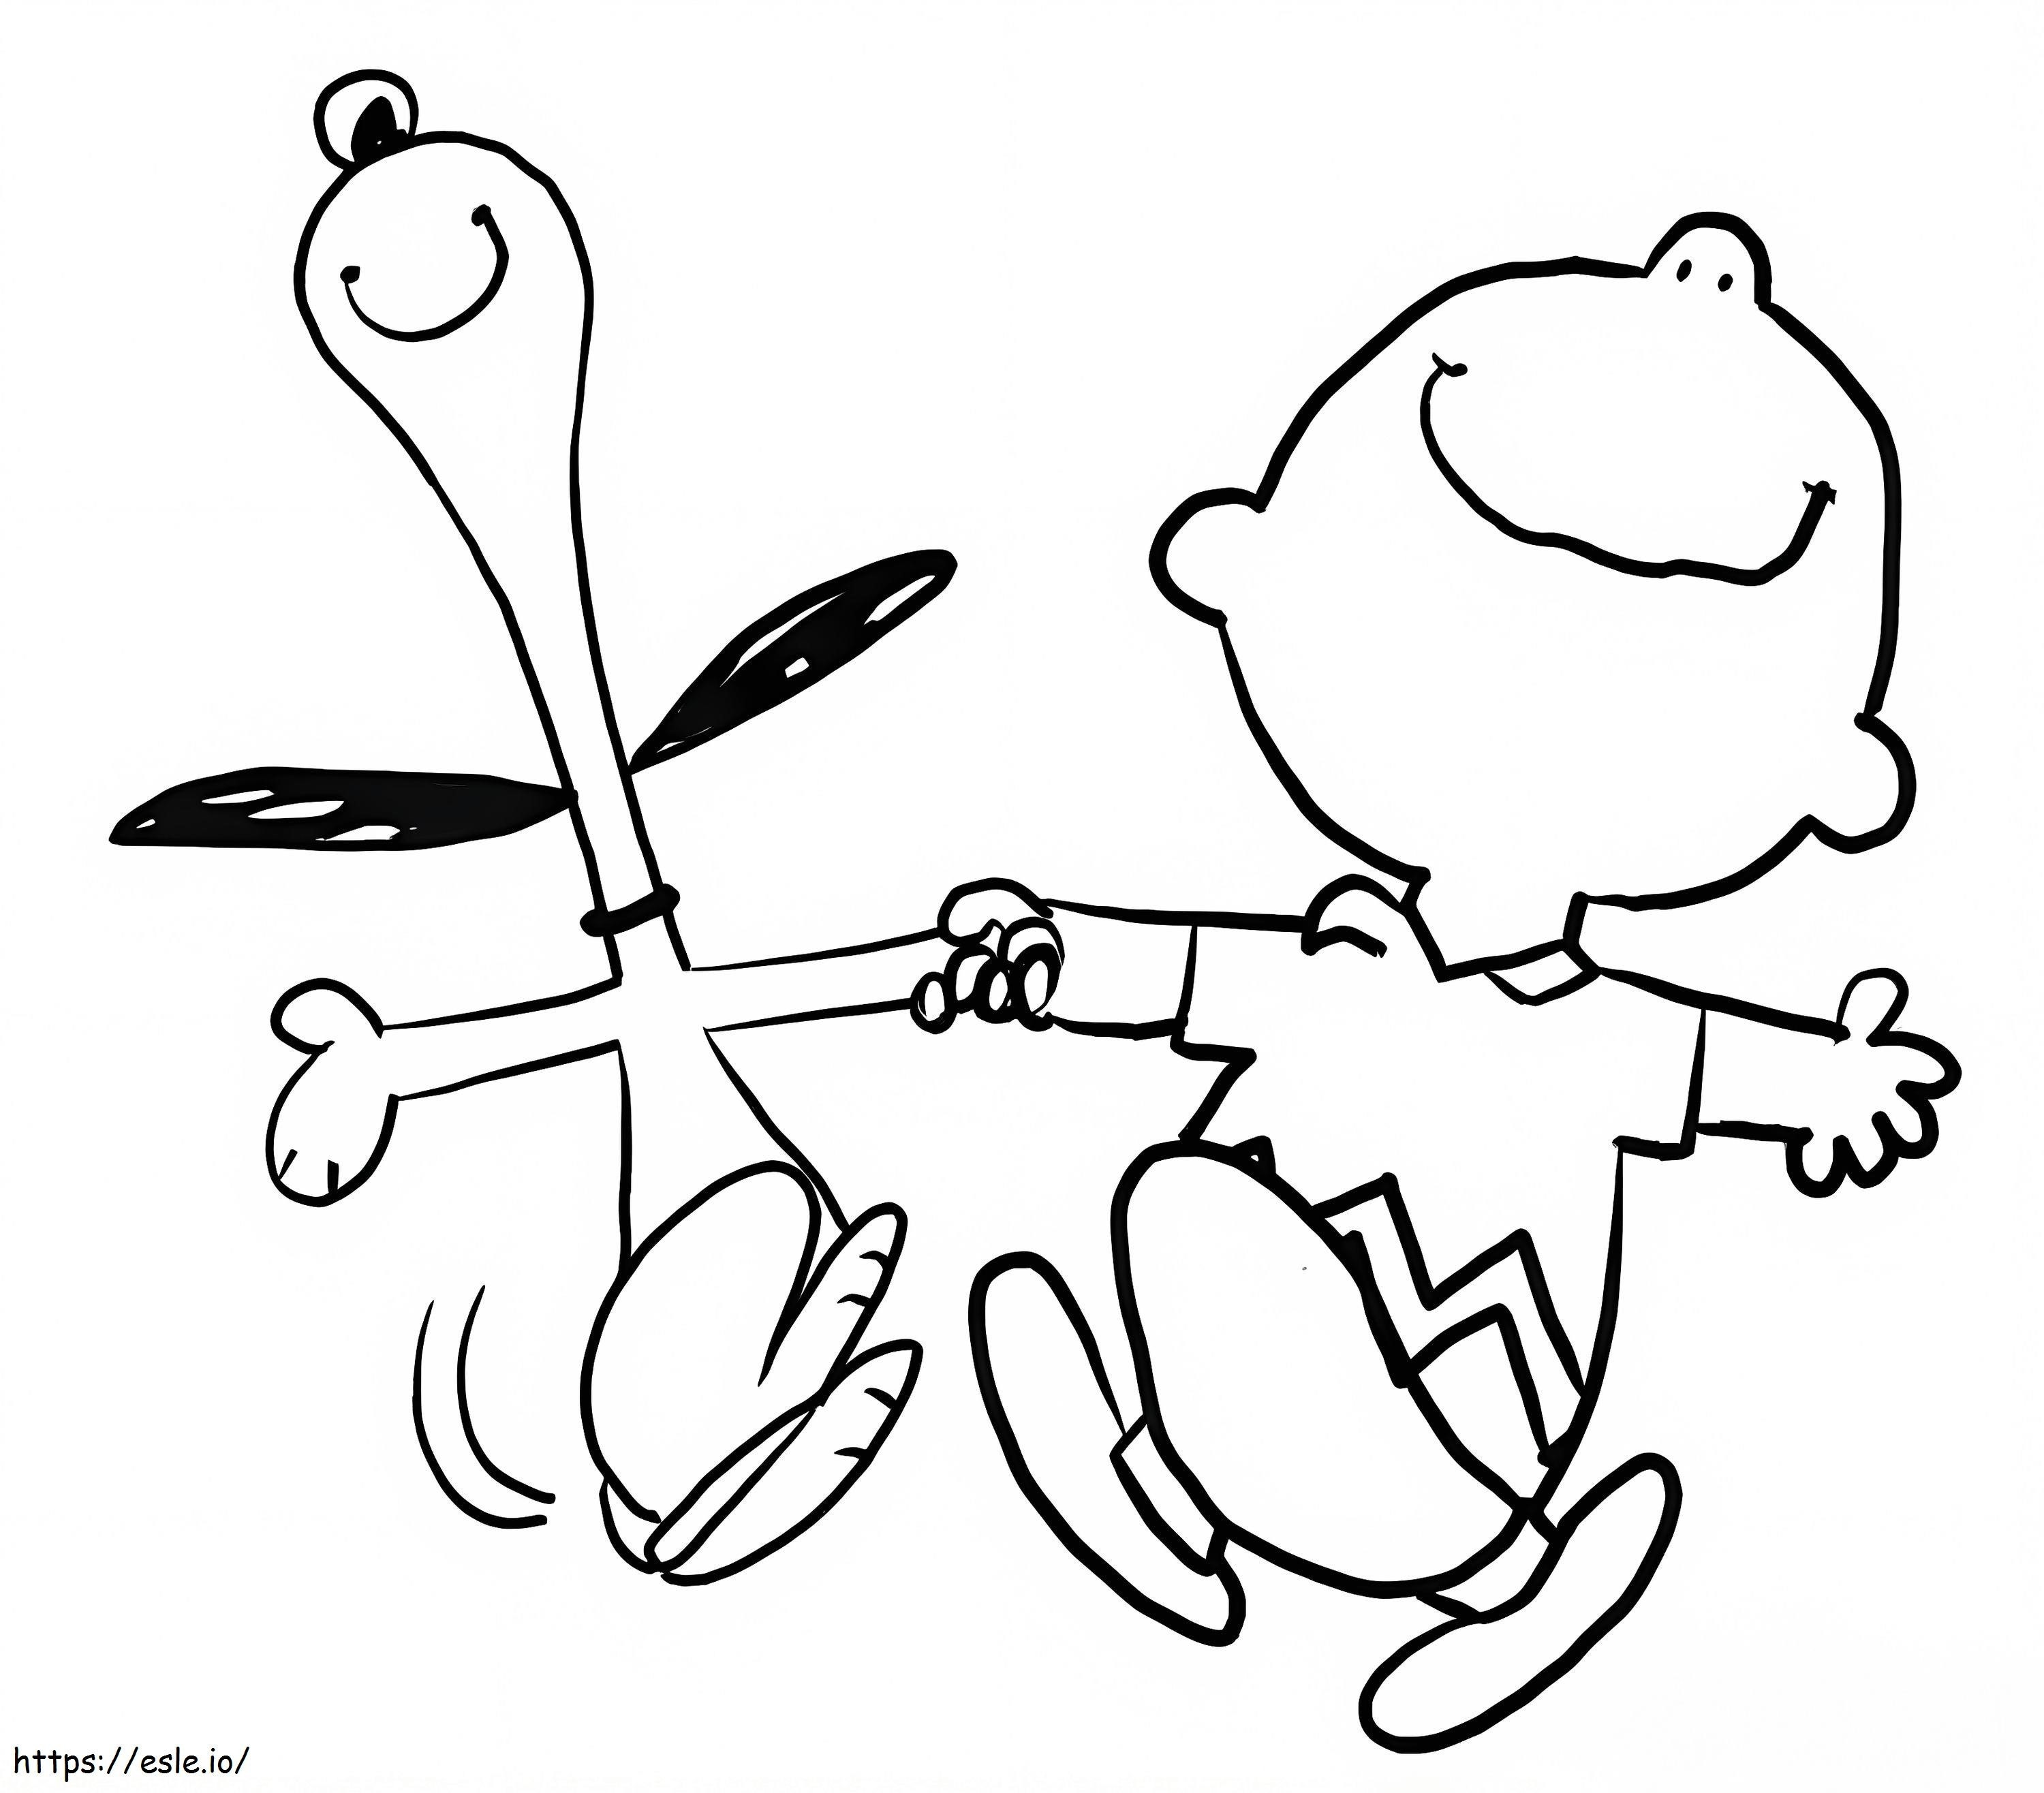 Contento Snoopy ve Charlie Brown boyama